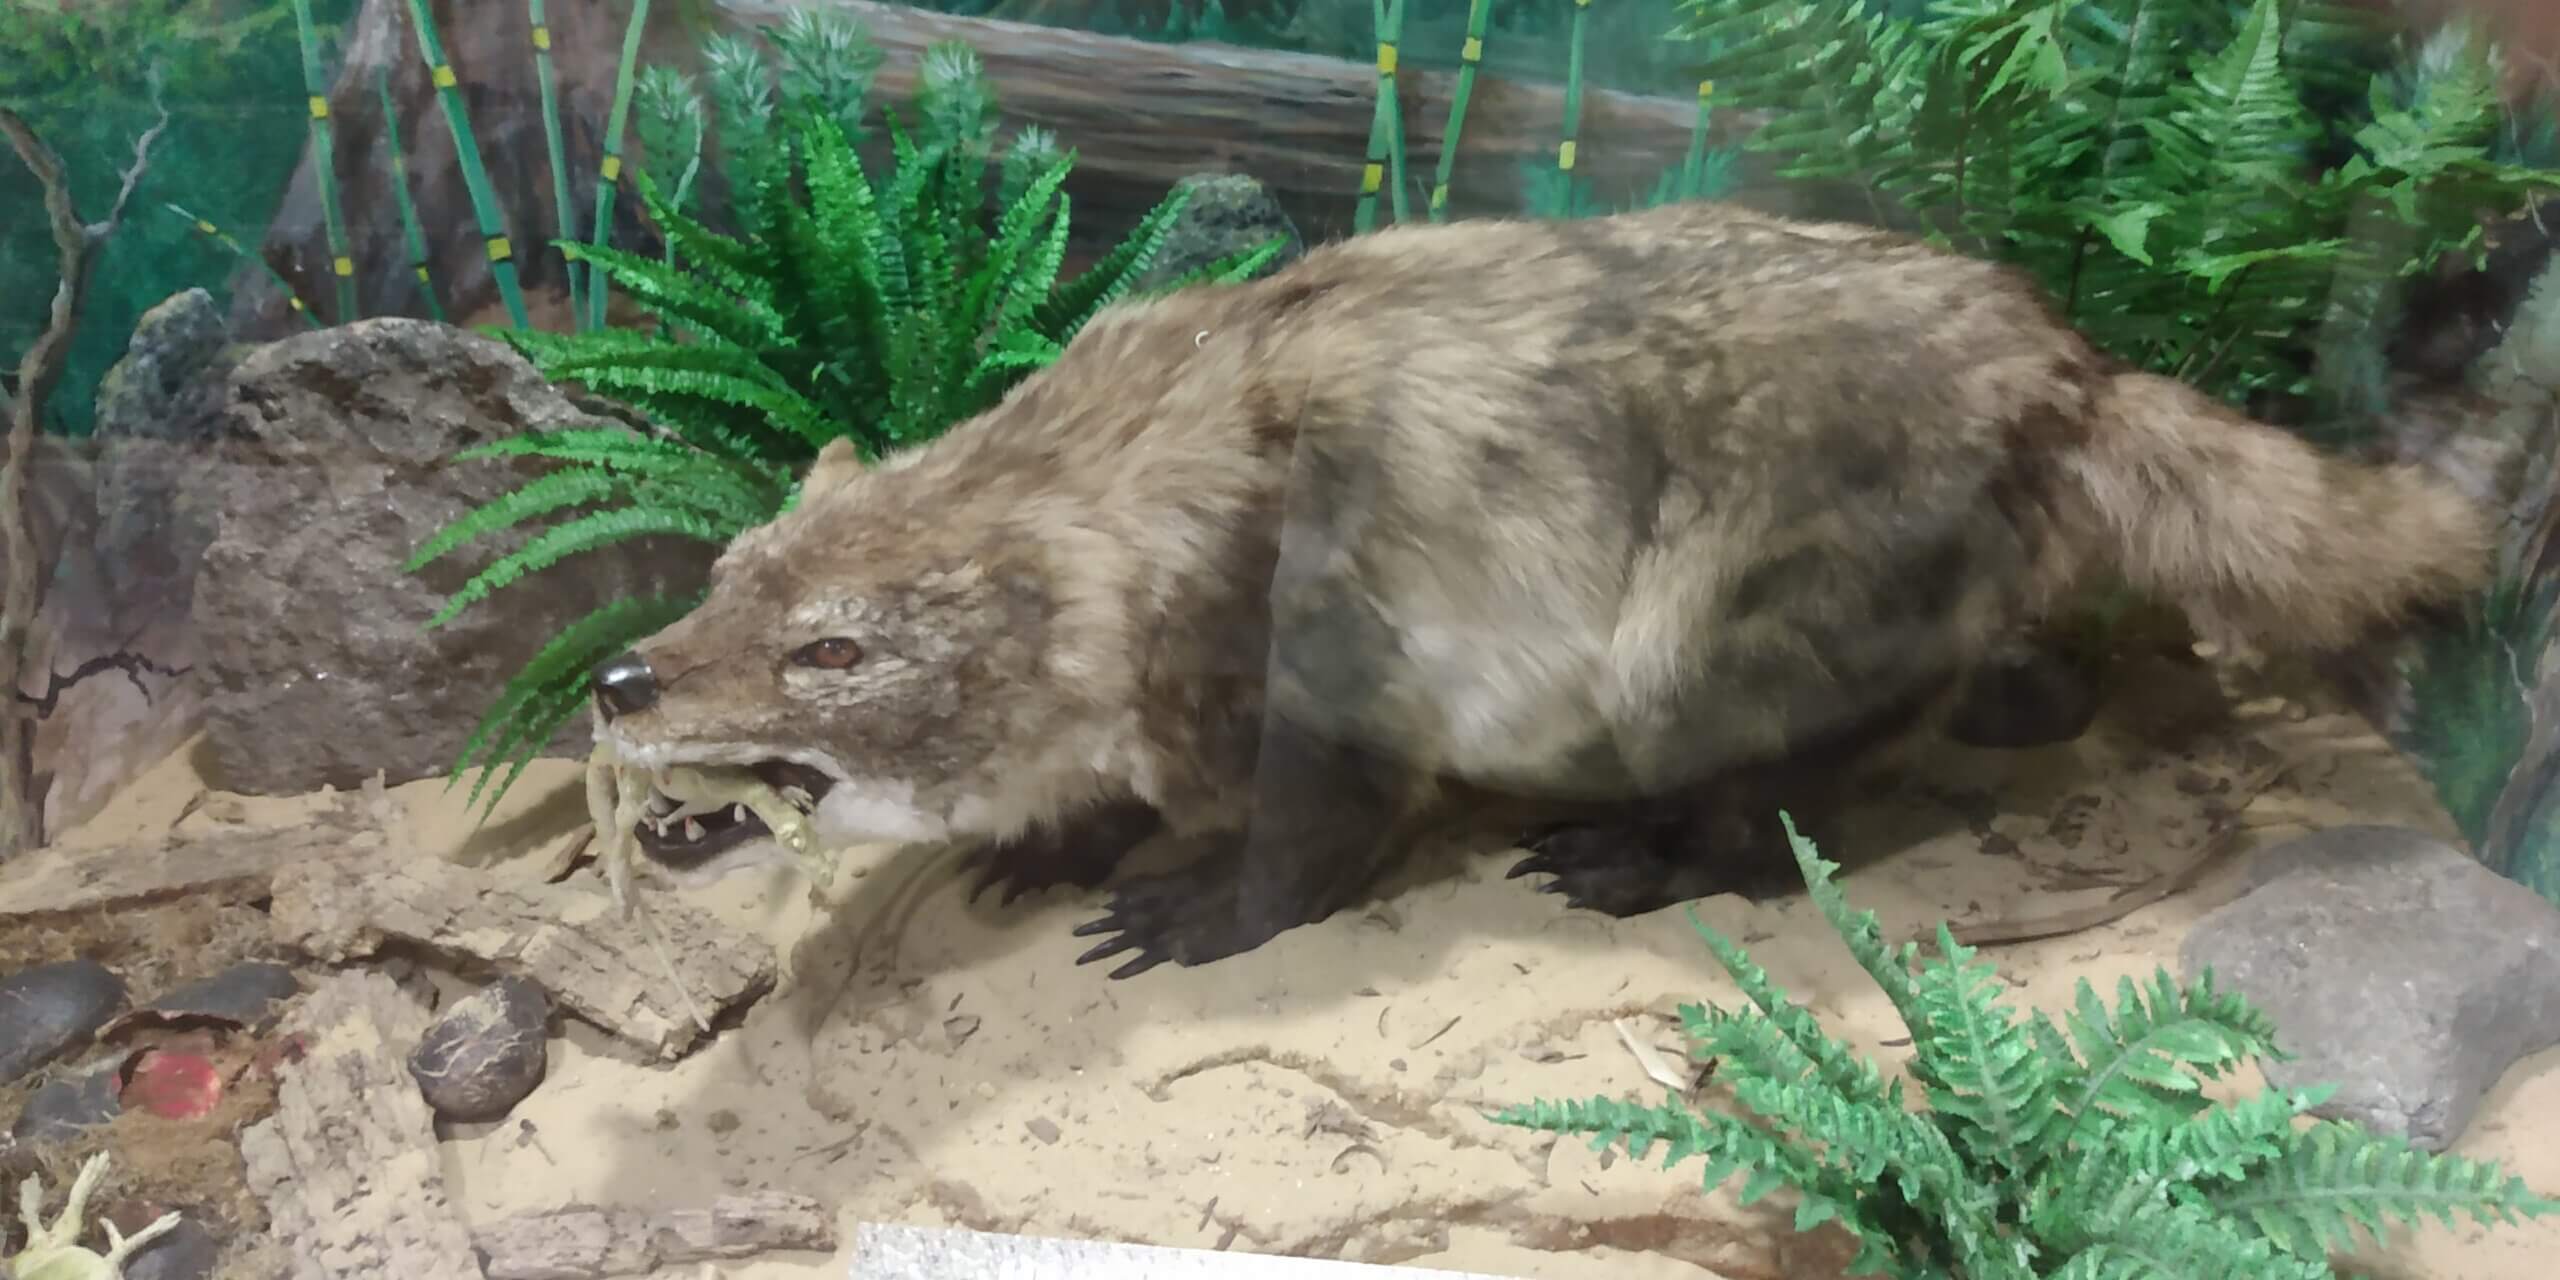 Repenomamus - Largest mammal known during dinosaur era